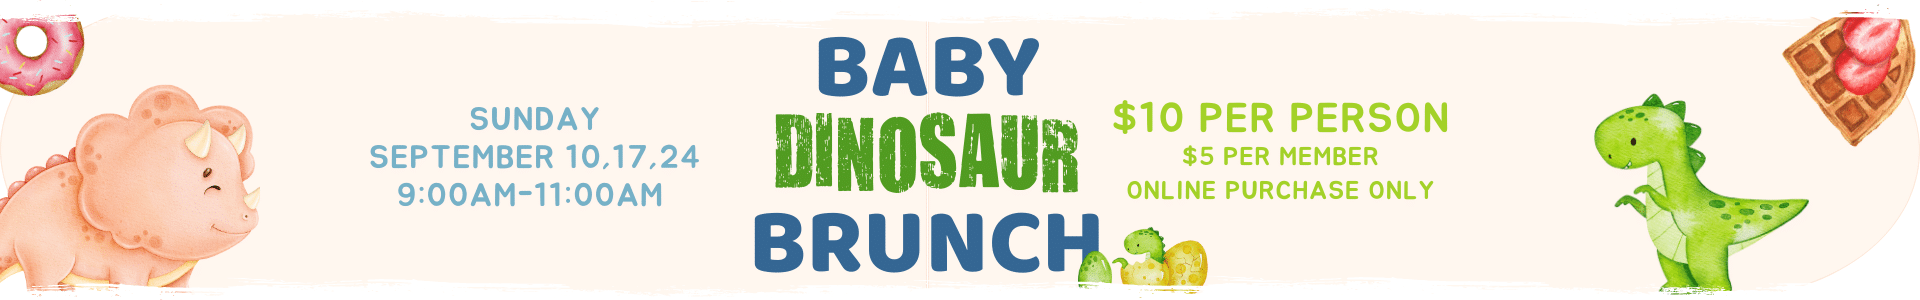 Baby Dinosaur Brunch